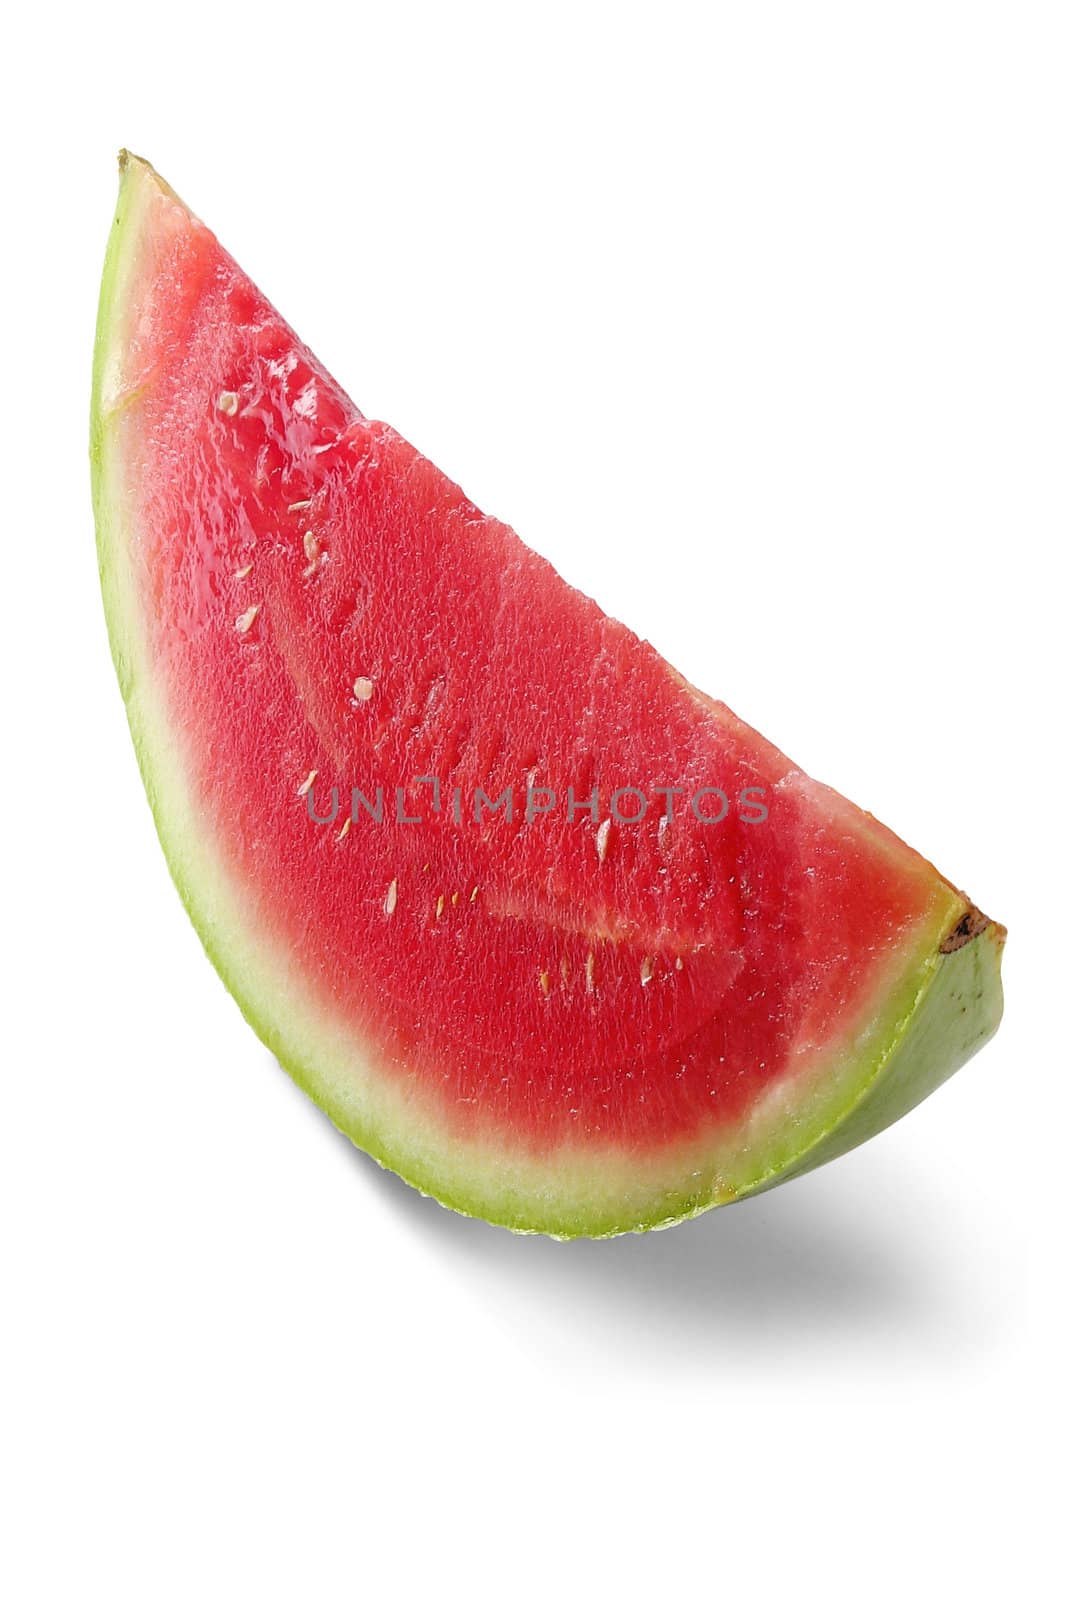 watermelon slice by Baltus